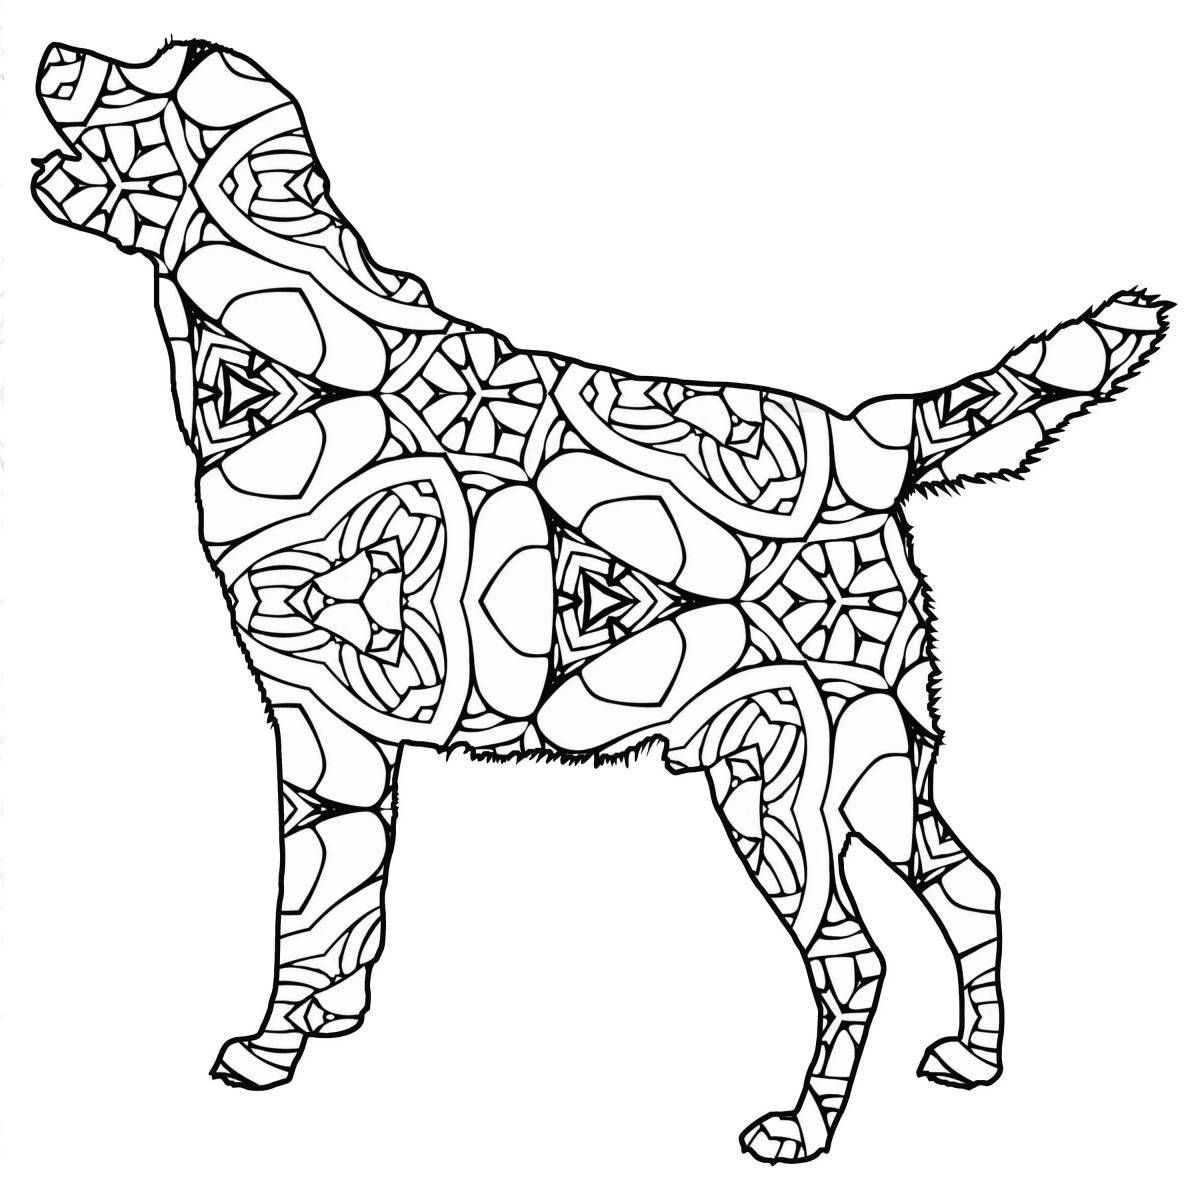 Charming dachshund antistress coloring book